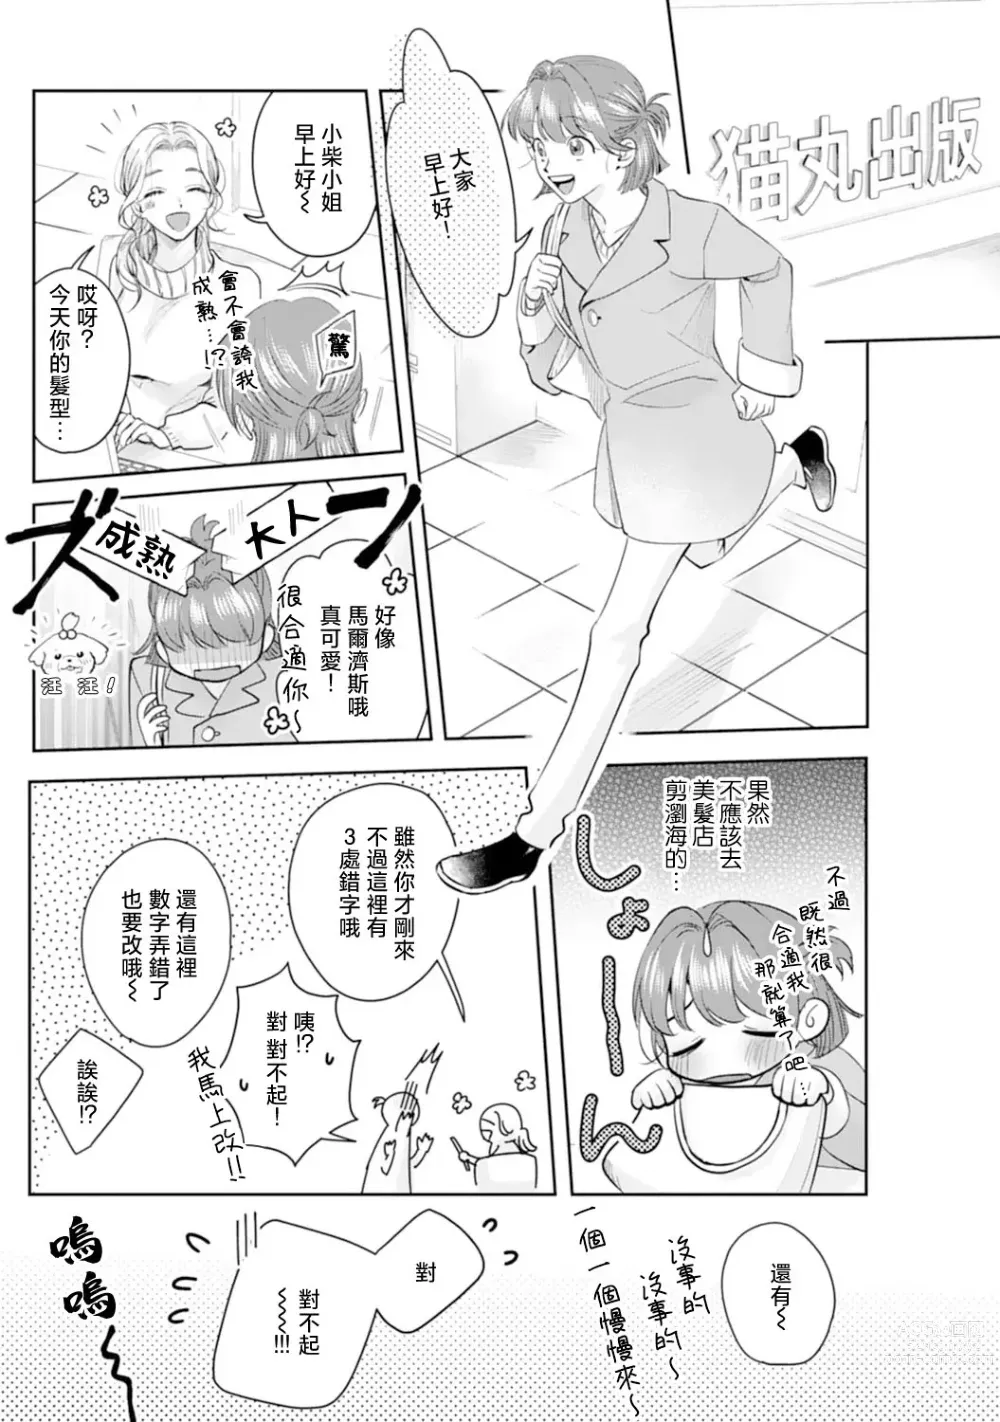 Page 8 of manga 浅叶老师专一的纯爱 1-2